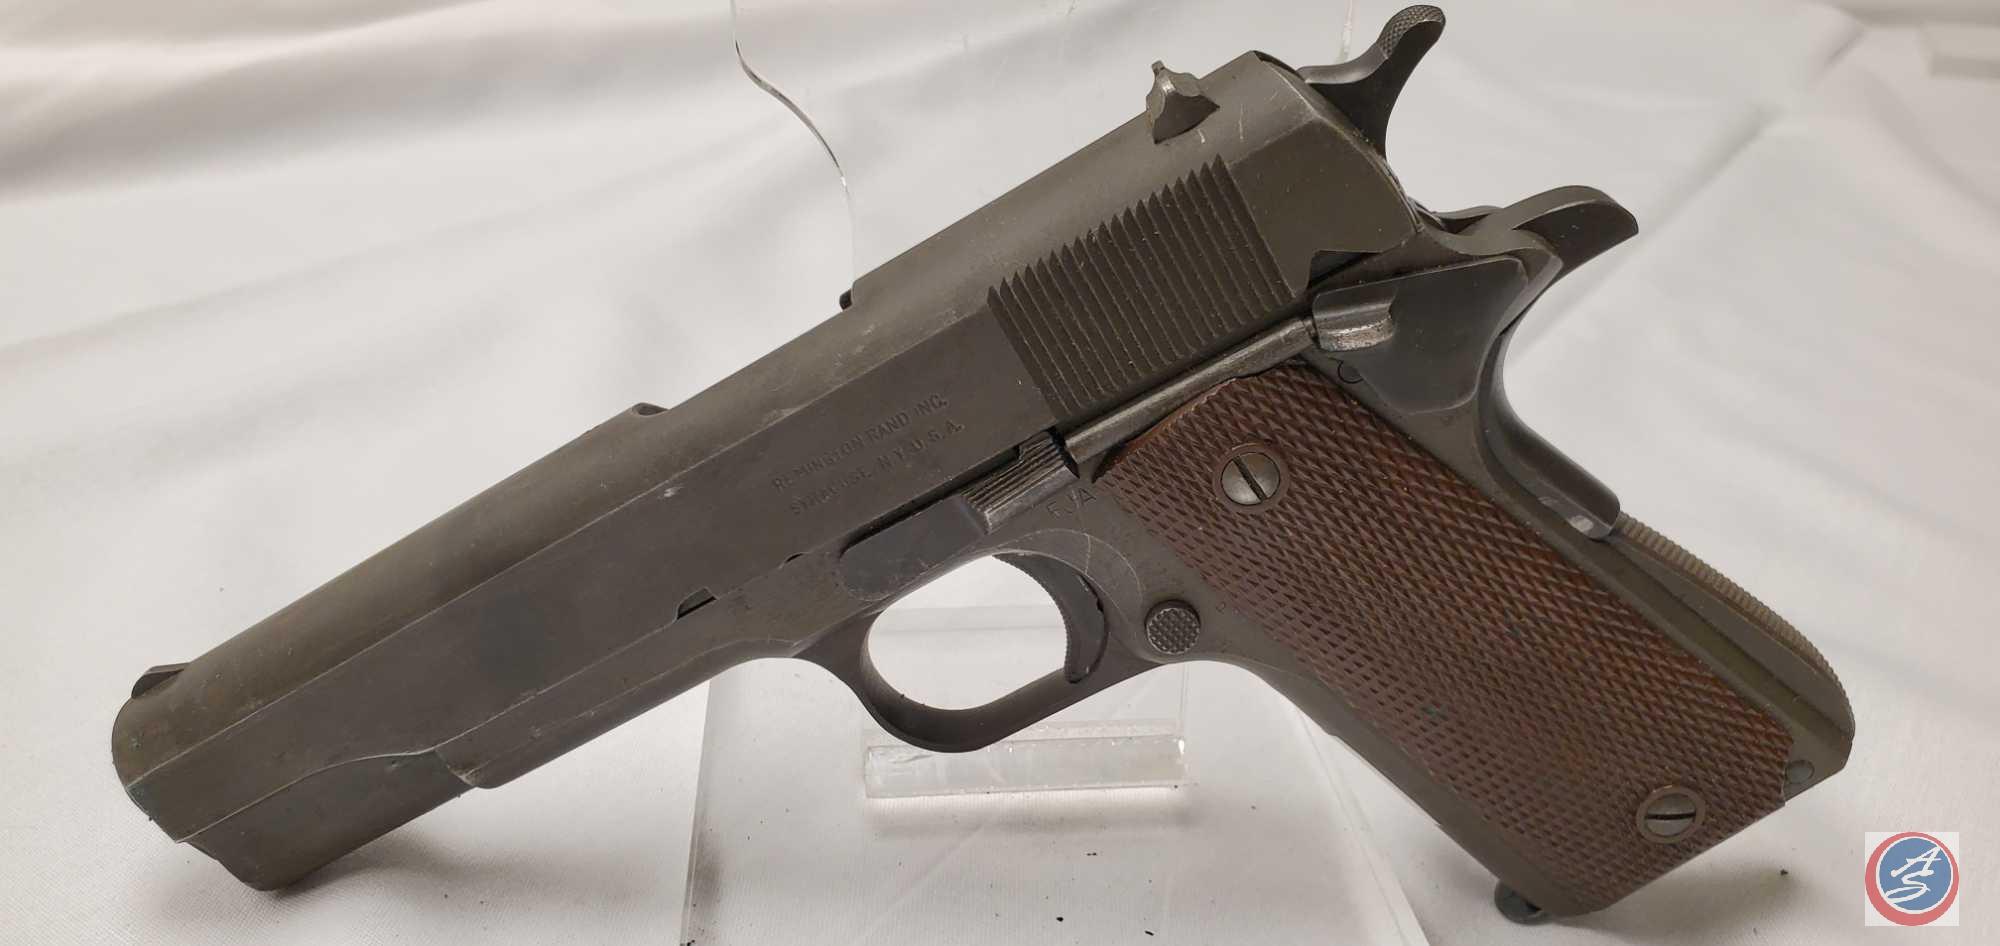 Remington Rand Model M1911A1 45 ACP Pistol US Army issue pistol marked U.S. Property M1911A1 U.S.